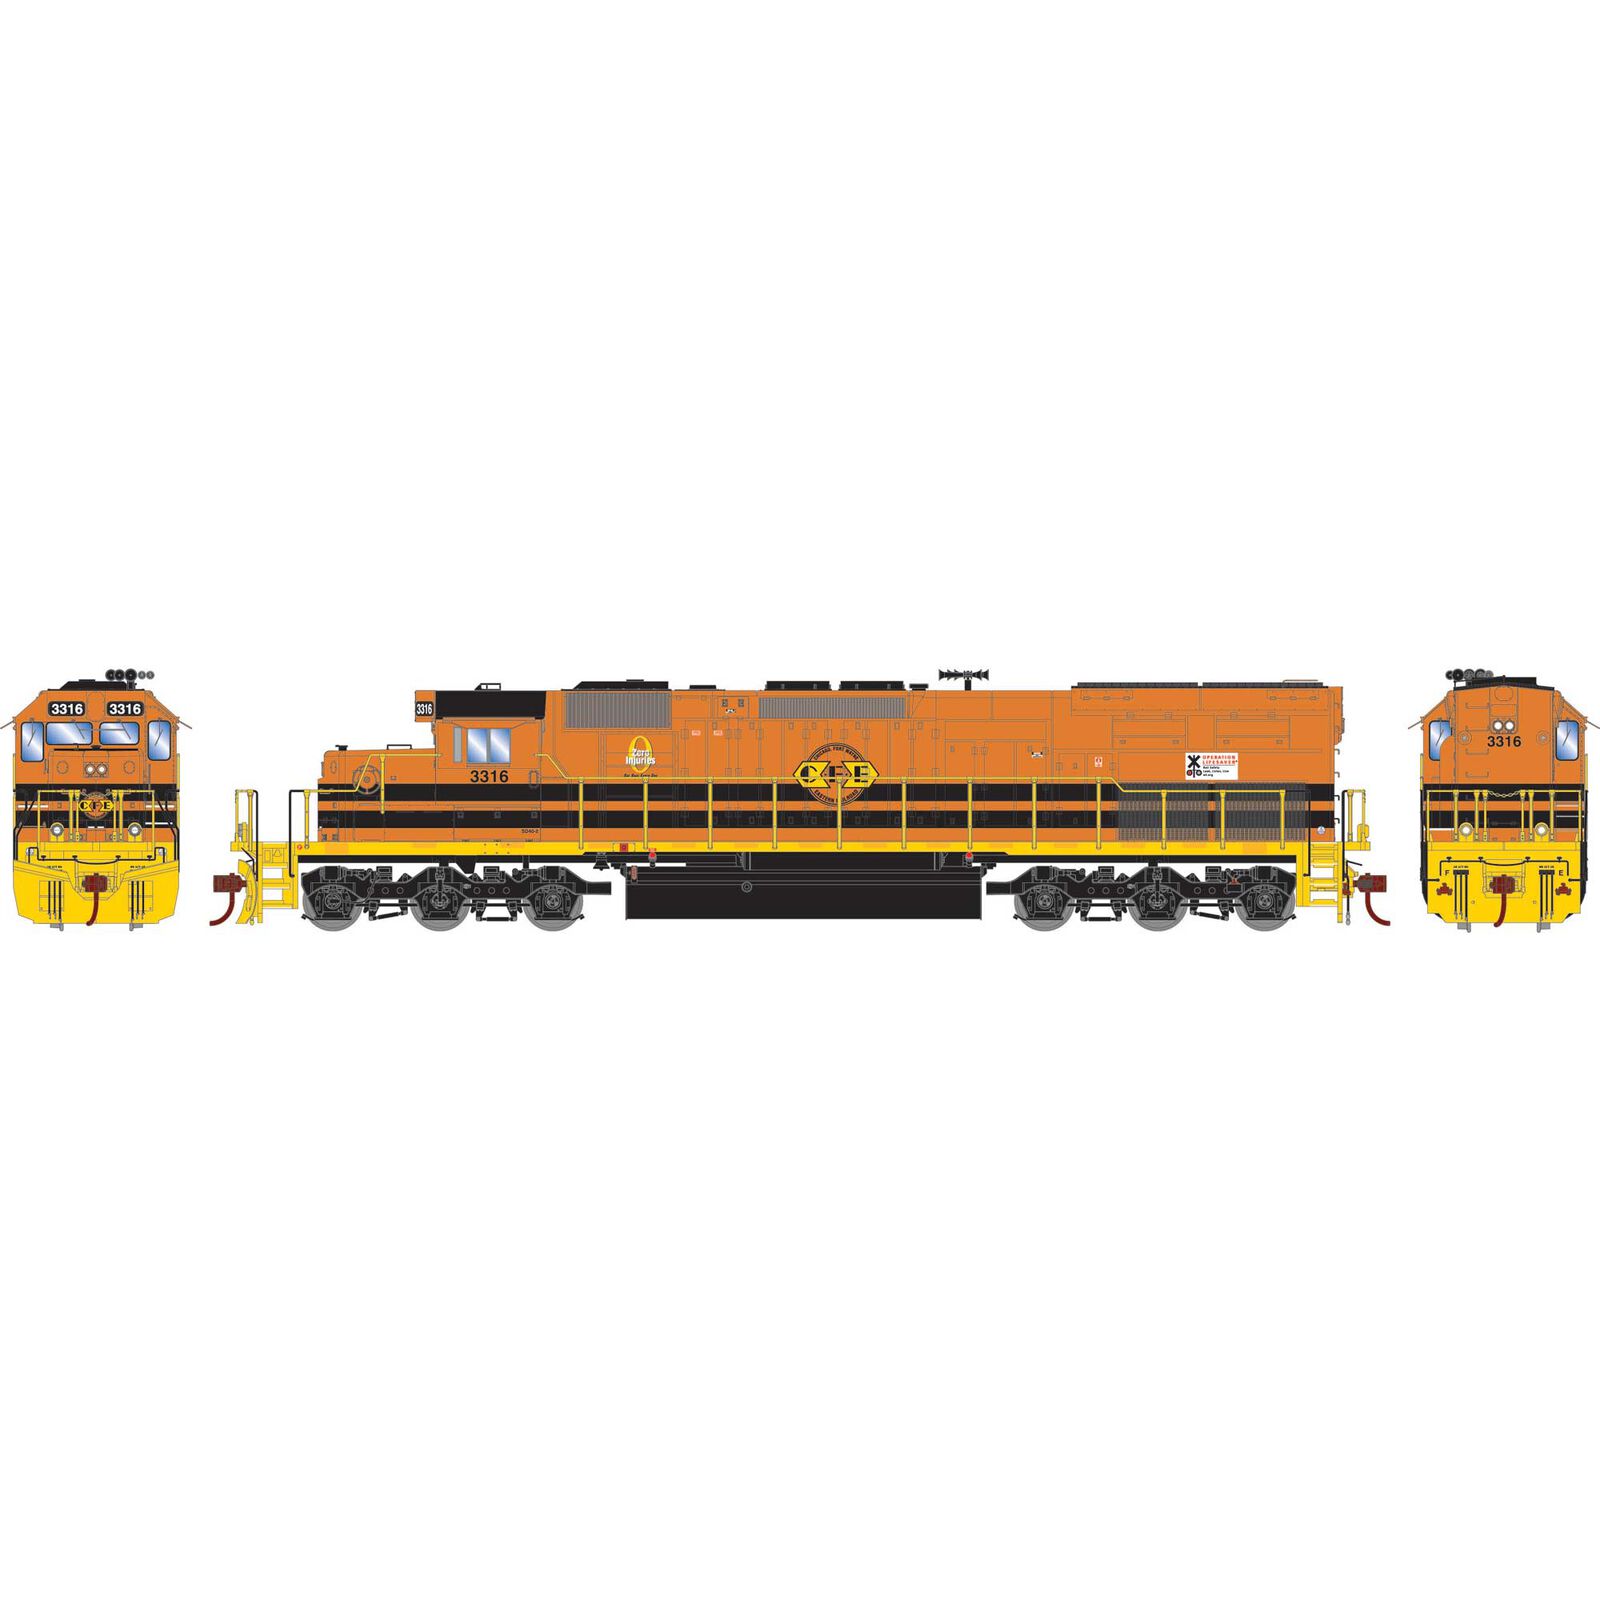 HO SD40T-2 Locomotive with DCC & Sound, CFE #3316